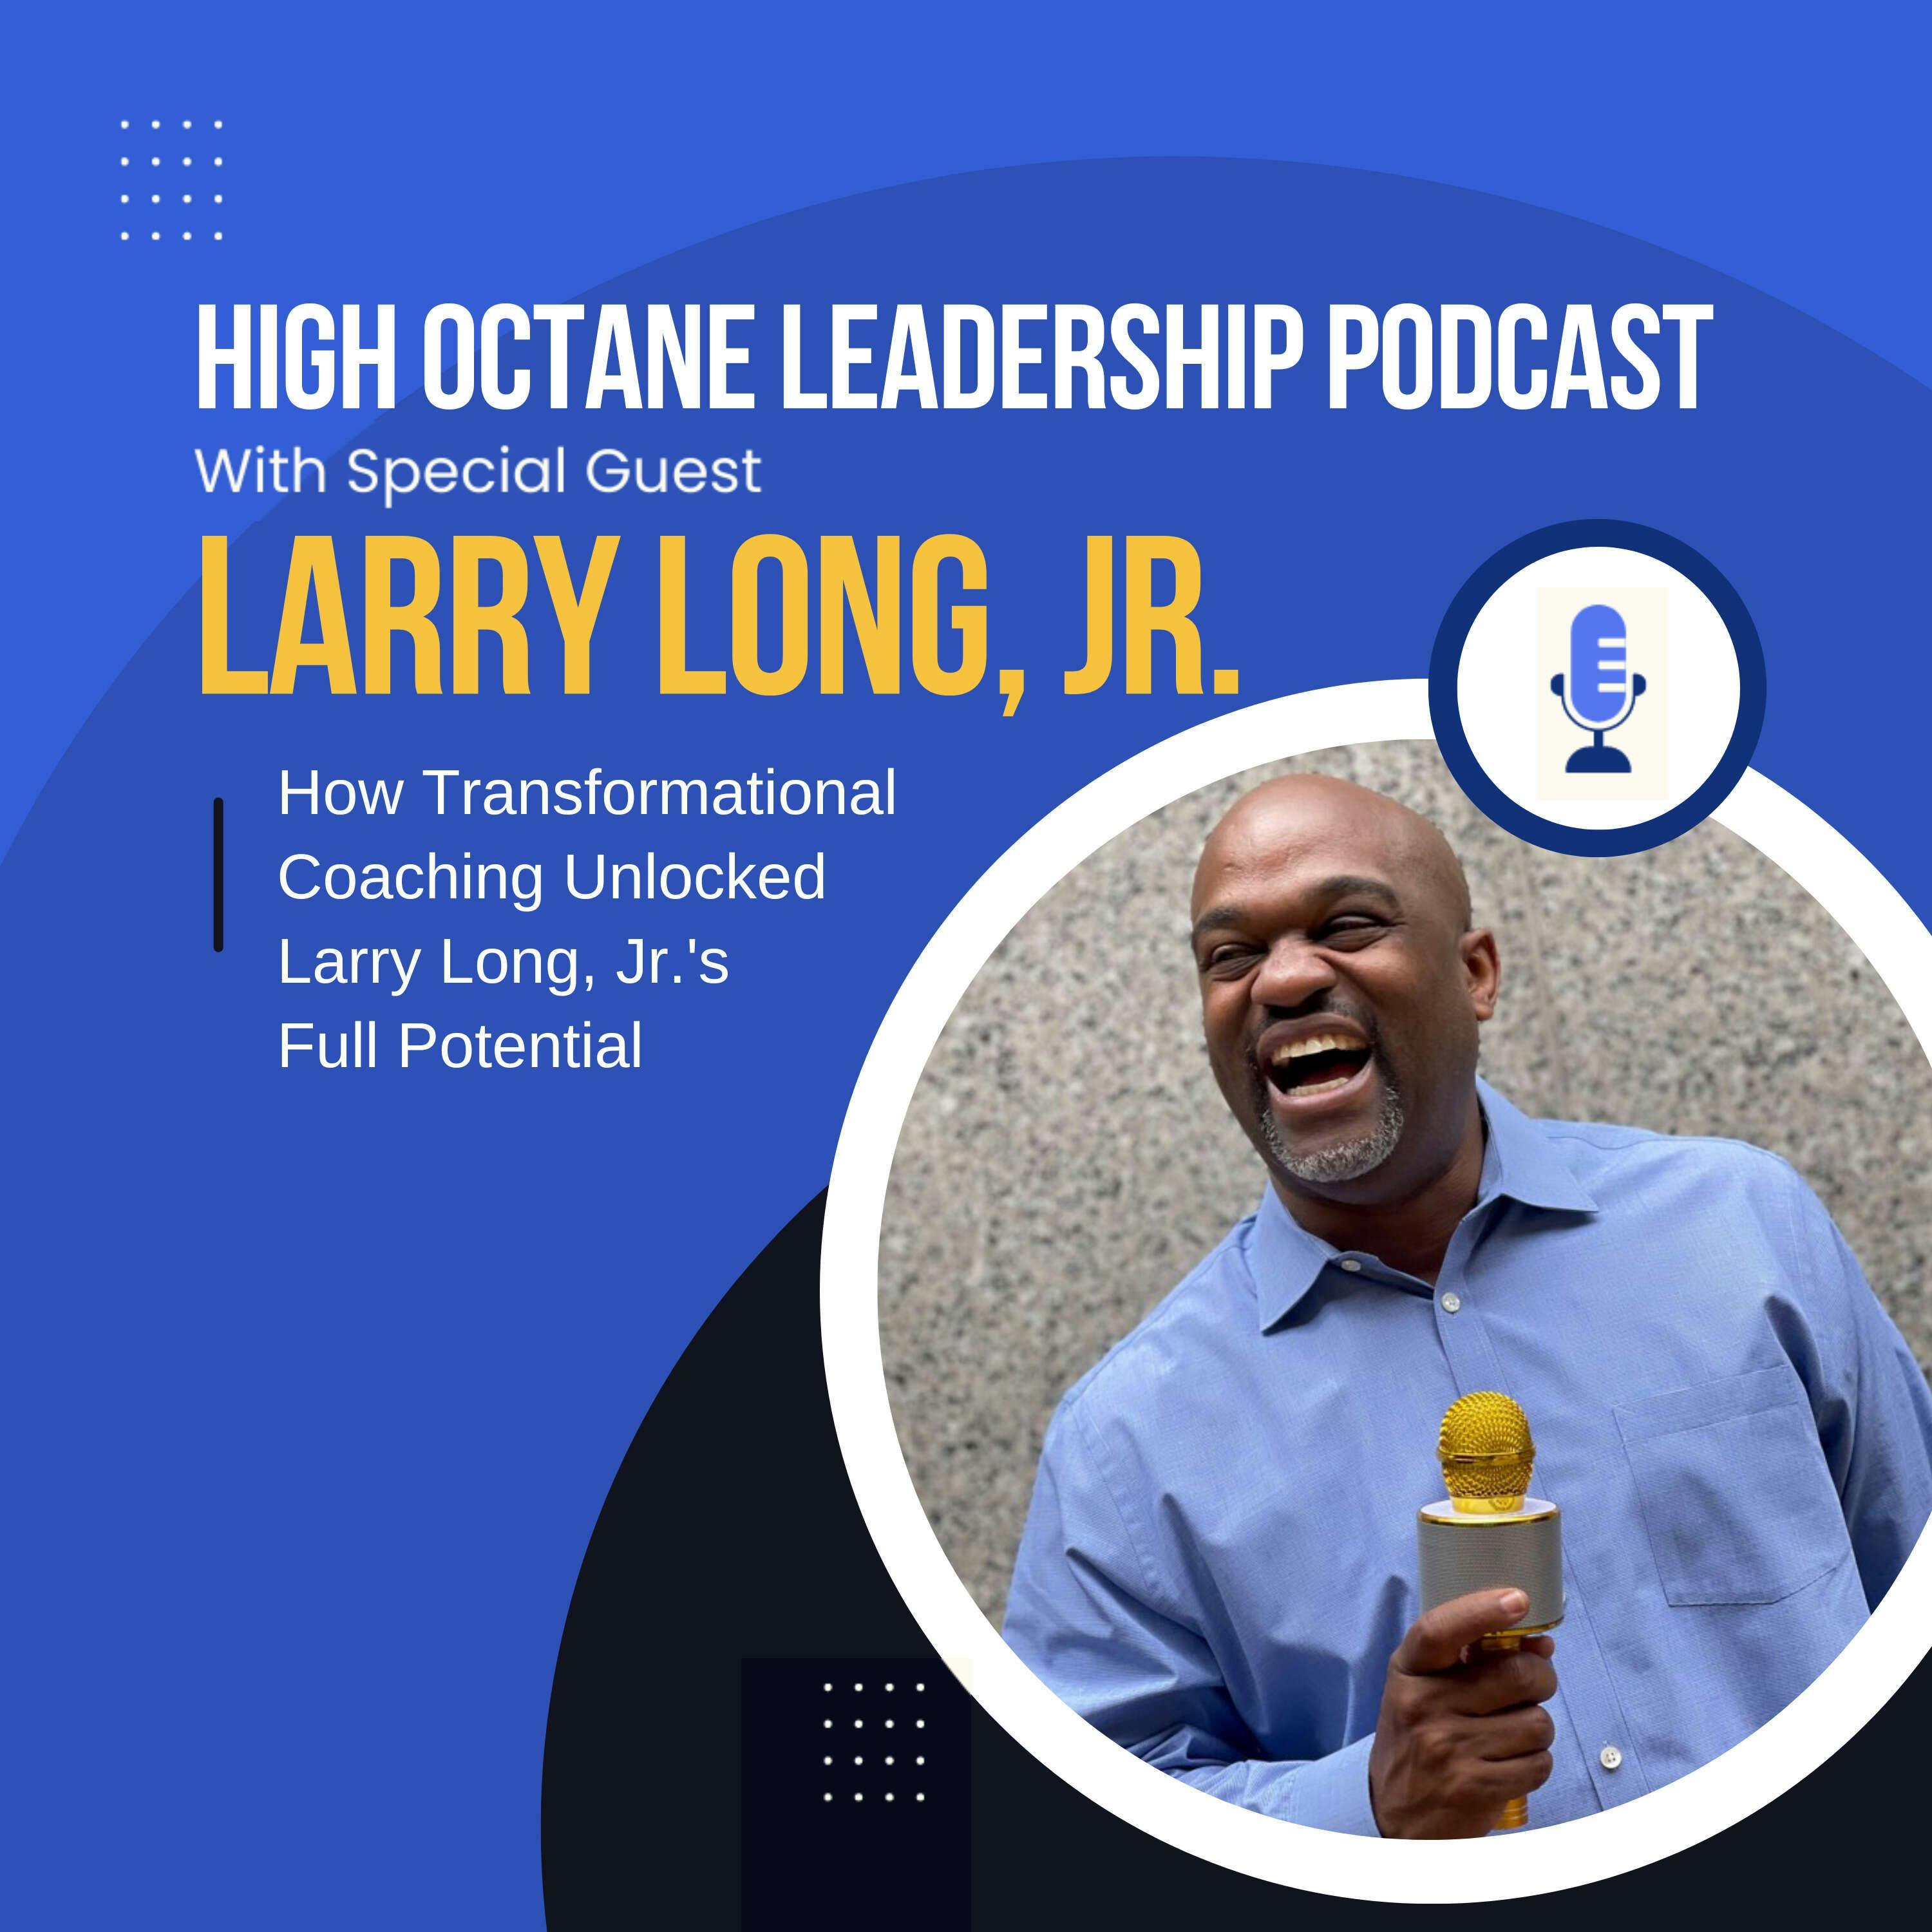 How Transformational Coaching Unlocked Larry Long Jr’s Full Potential